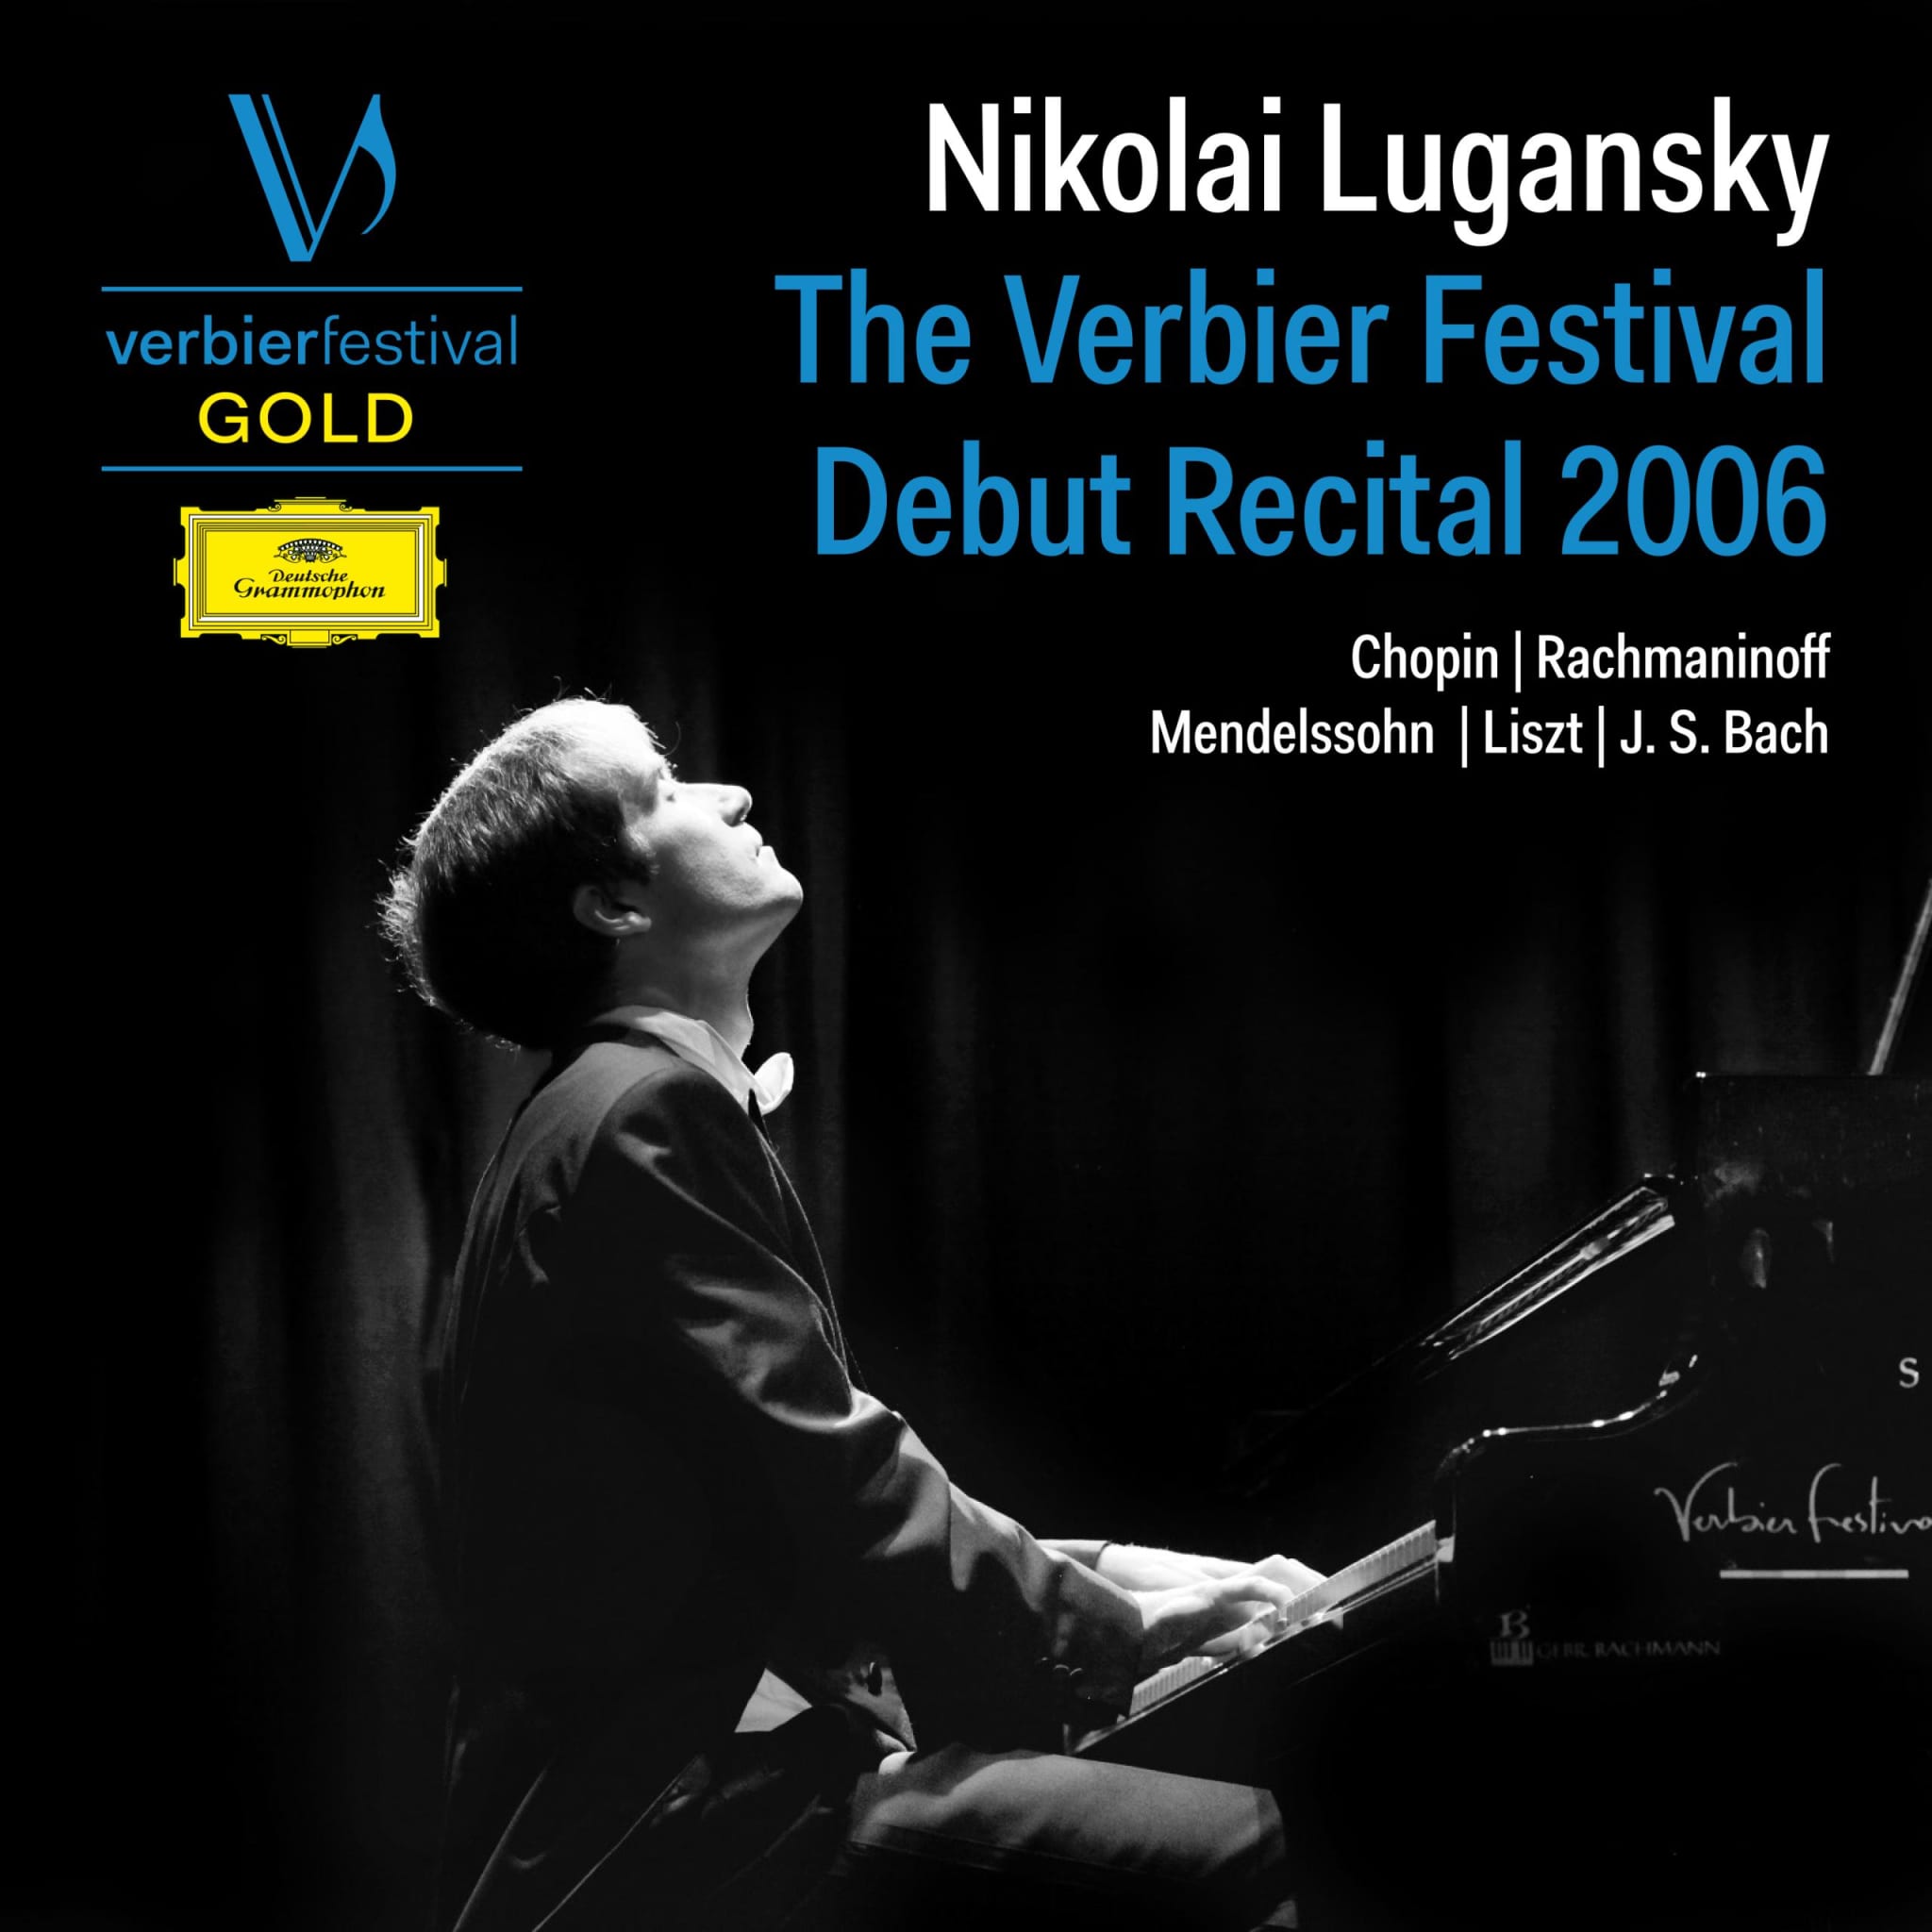 Nikolai Lugansky: The Verbier Festival Debut Recital 2006 (Live)